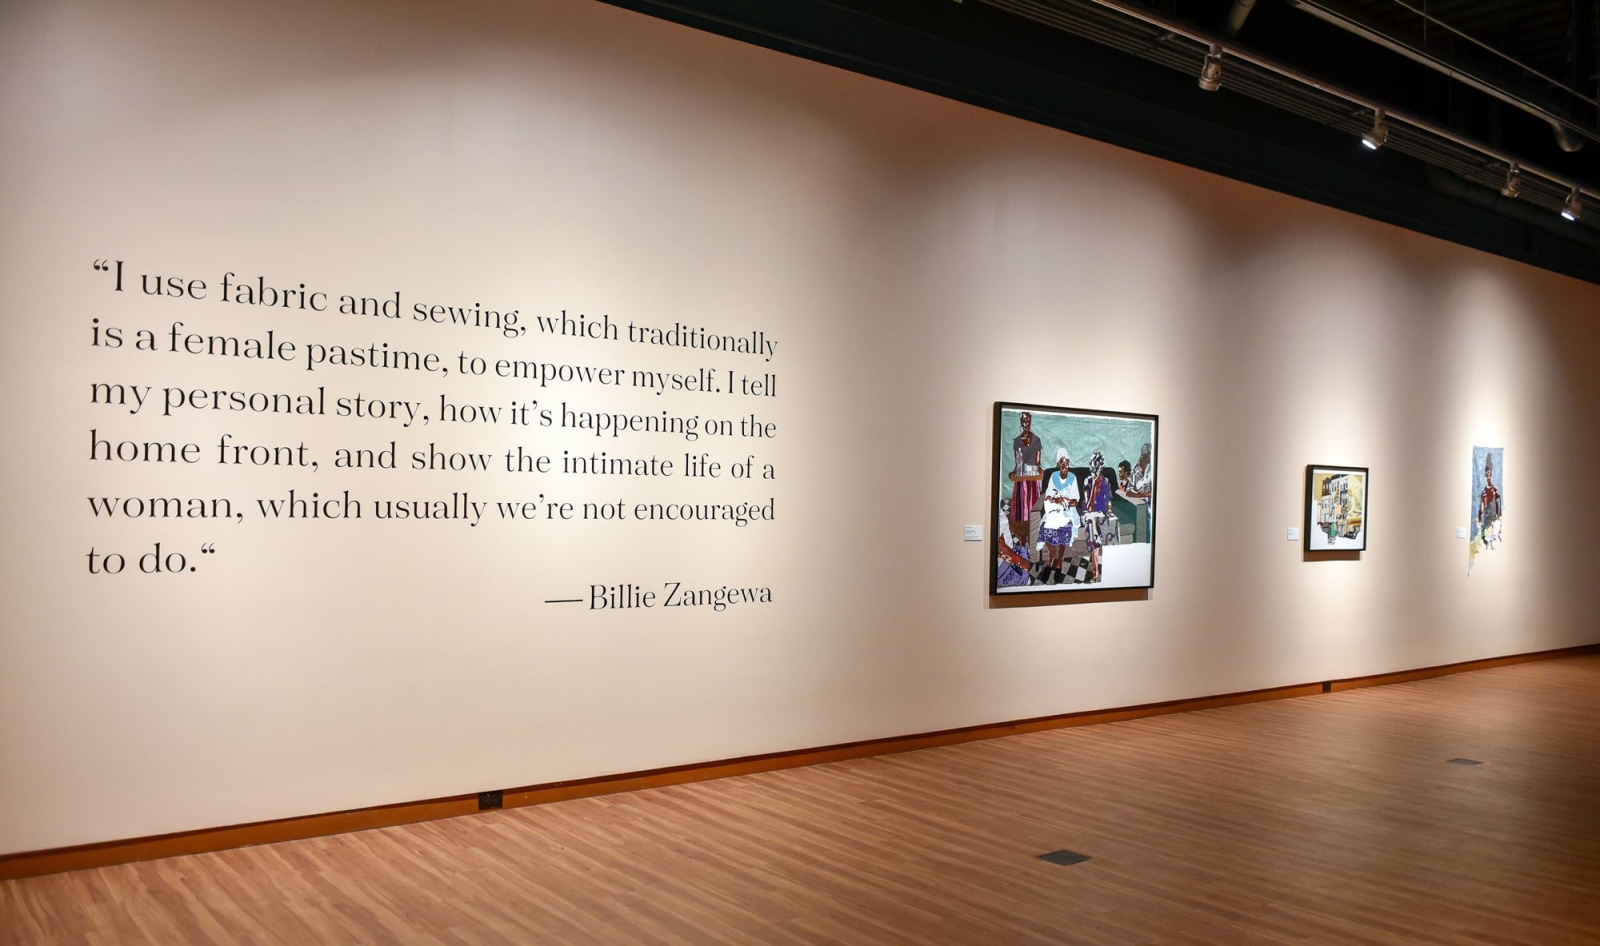 Billie Zangewa: Thread for a Web Begun, Installation view at Harvey B. Gantt Center for African-American Arts + Culture, Charlotte, North Carolina